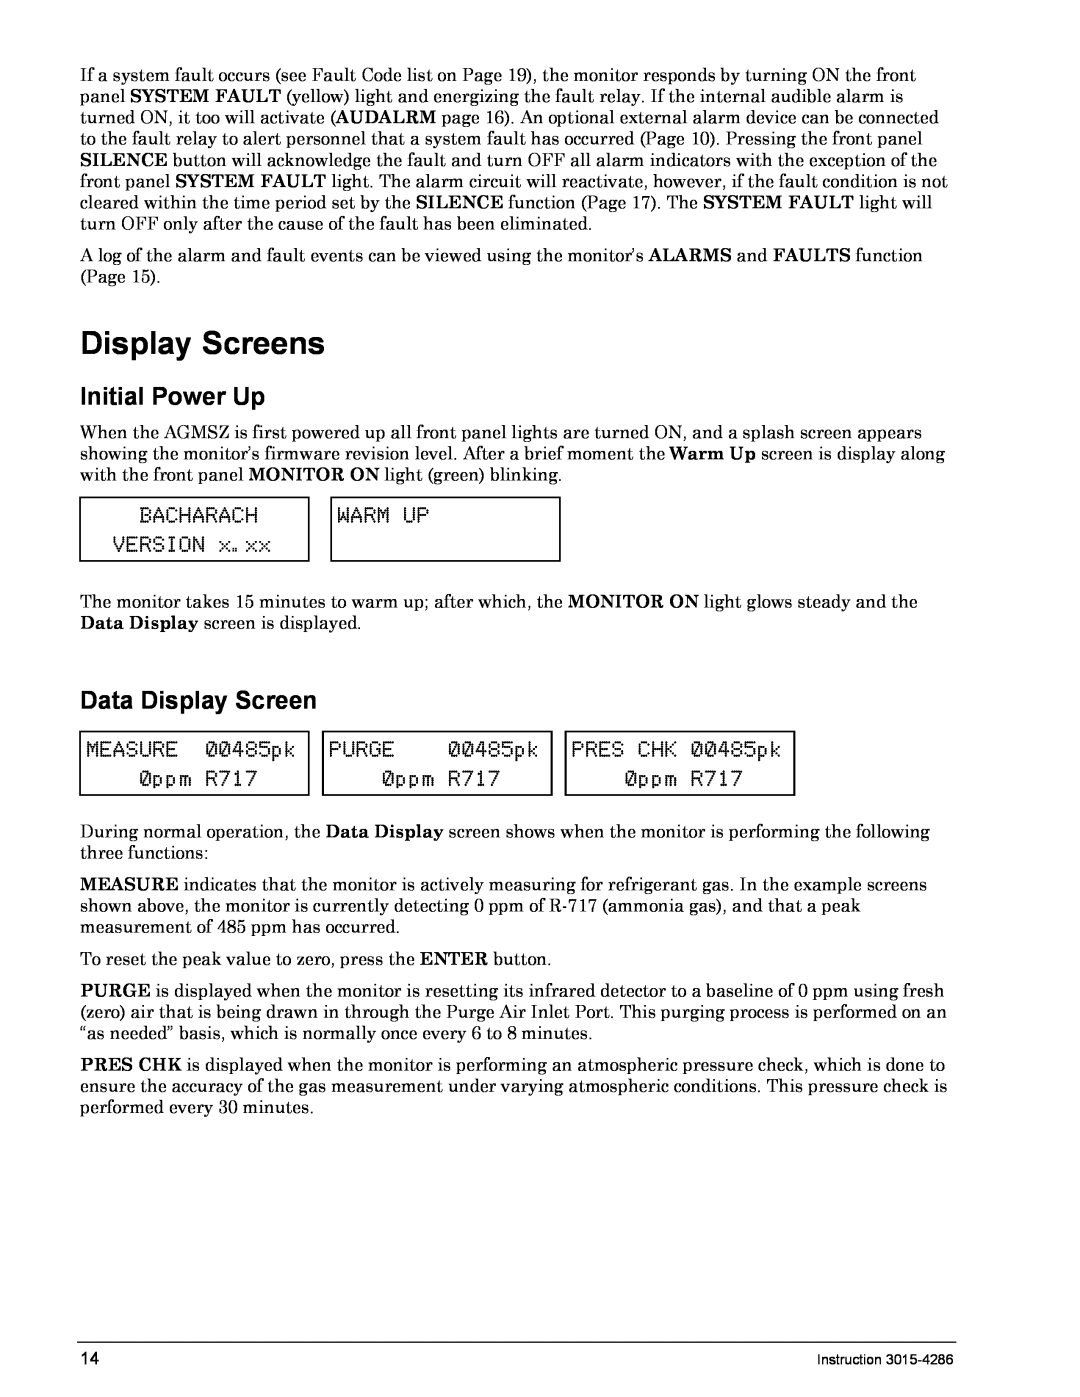 Bacharach 3015-4286 manual Display Screens, Initial Power Up, Data Display Screen 